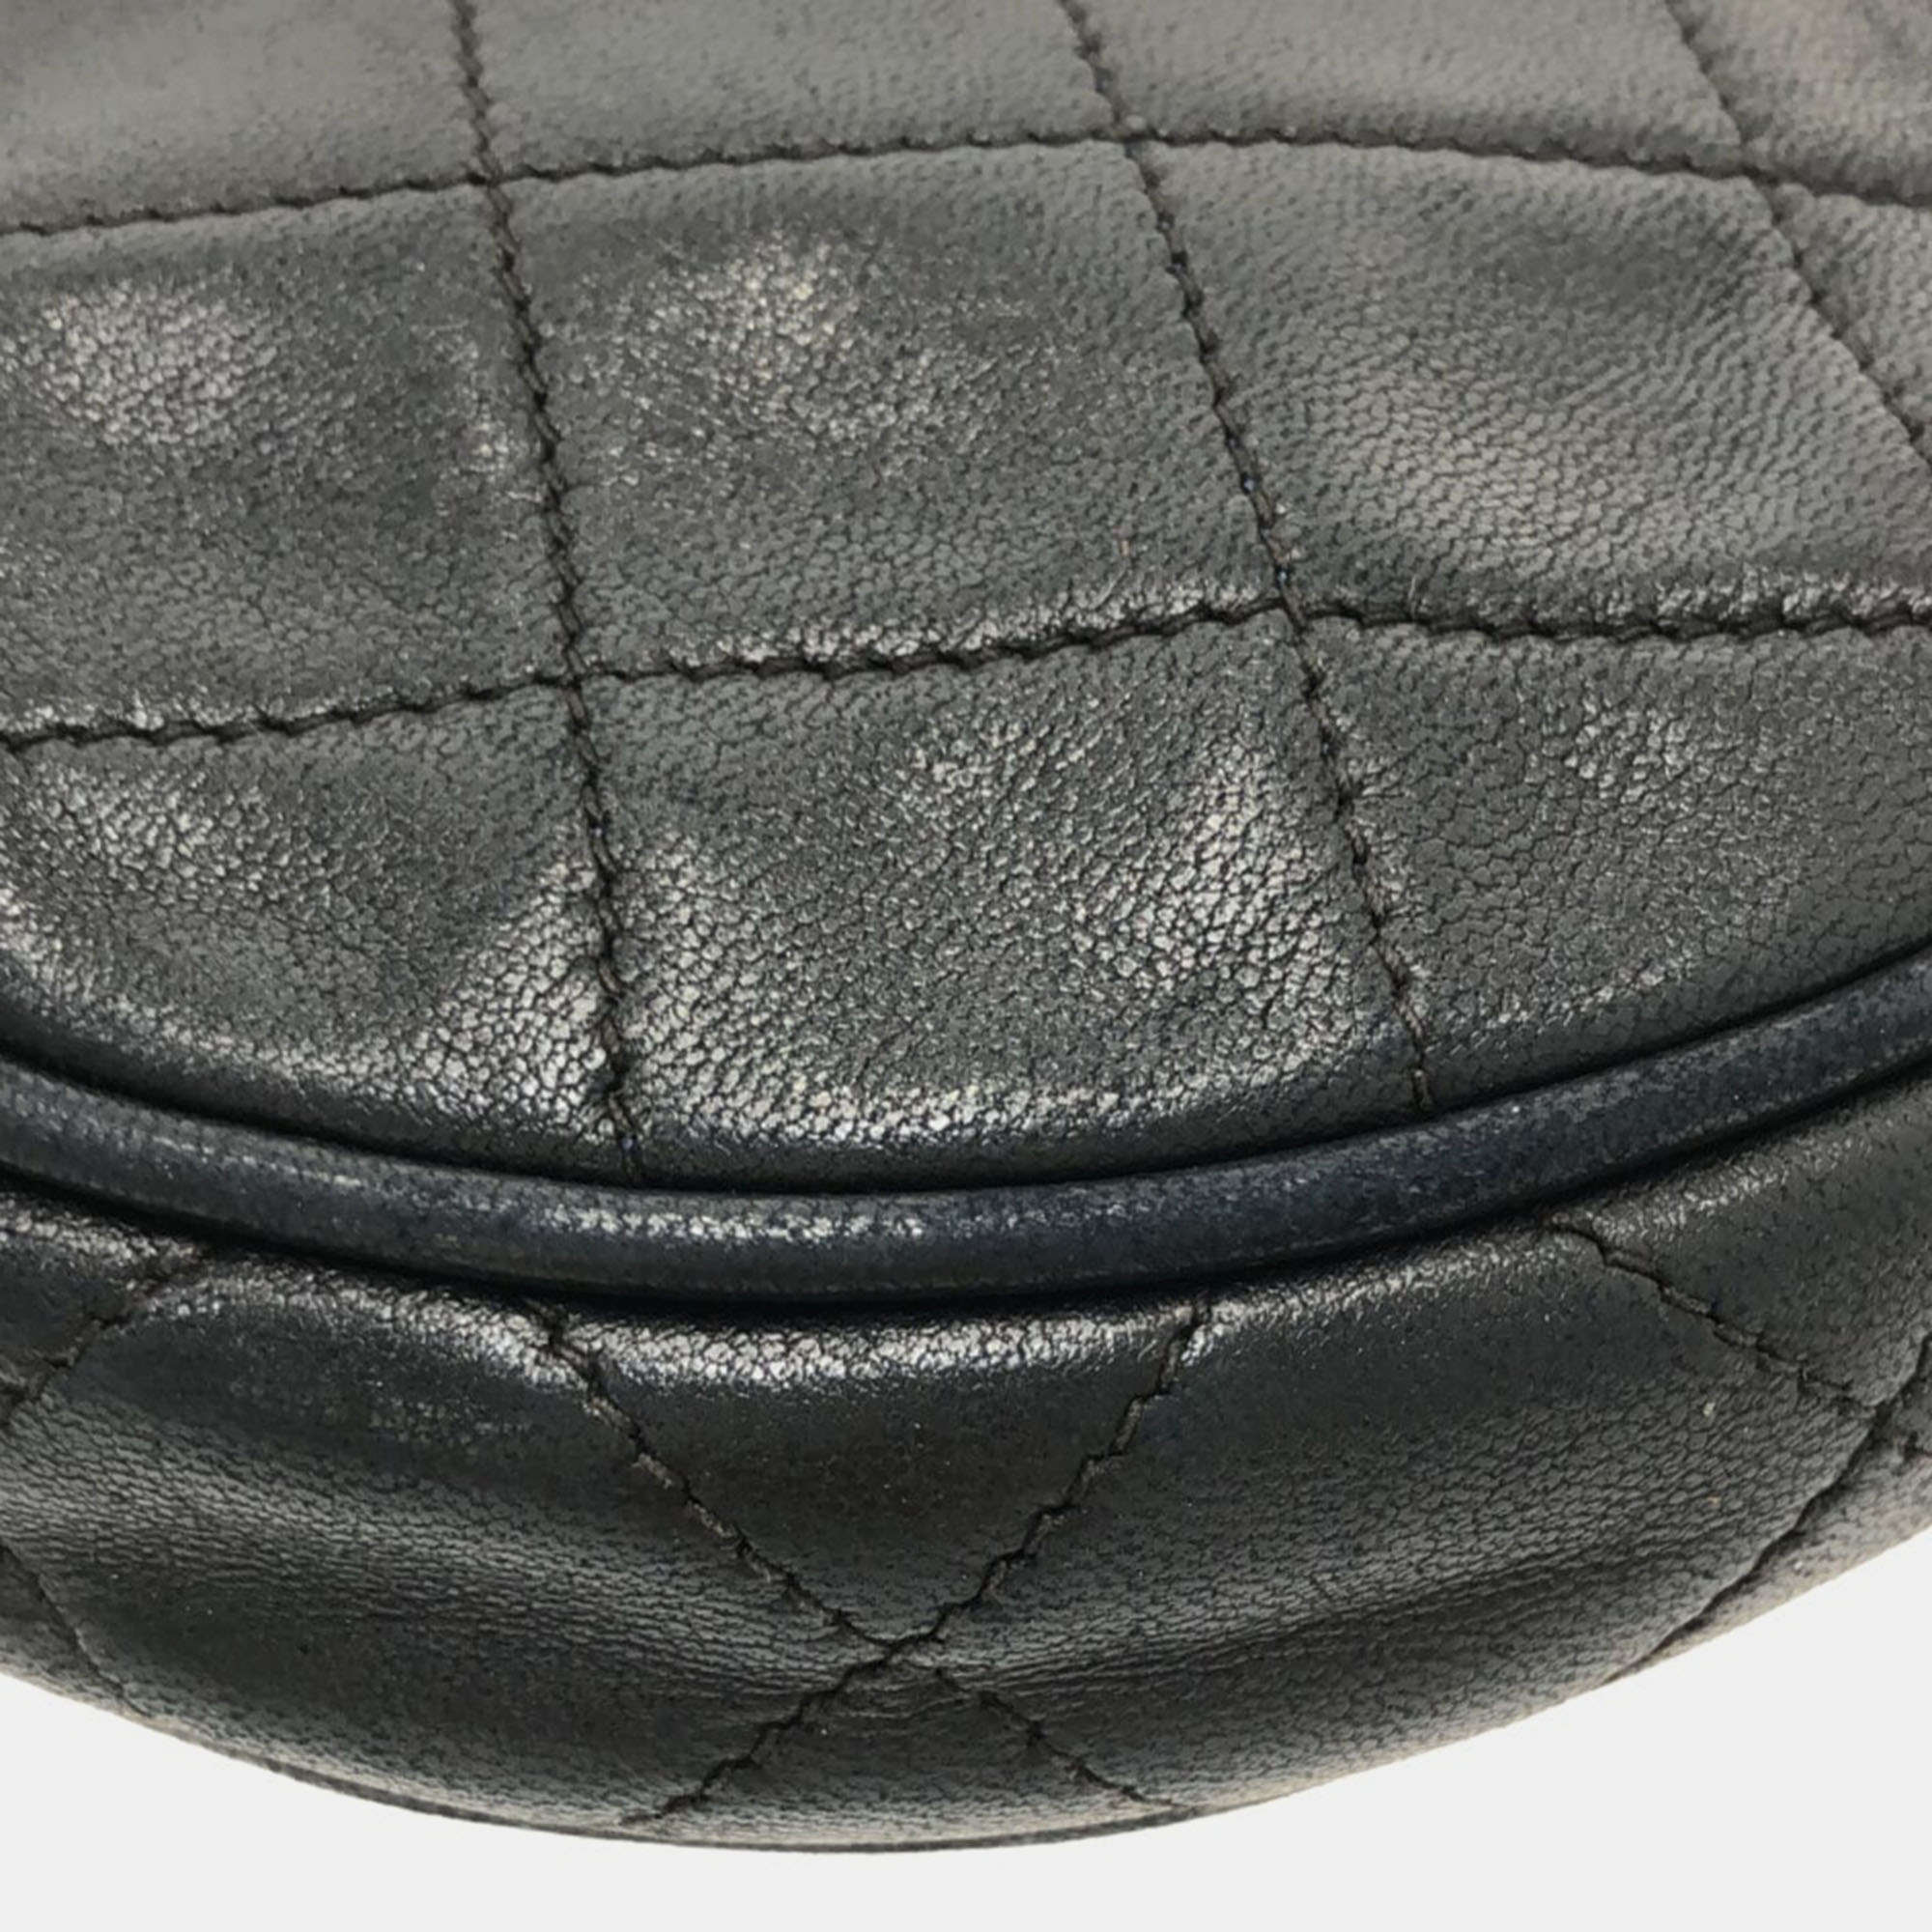 Chanel Black Leather Tassle Round Bag